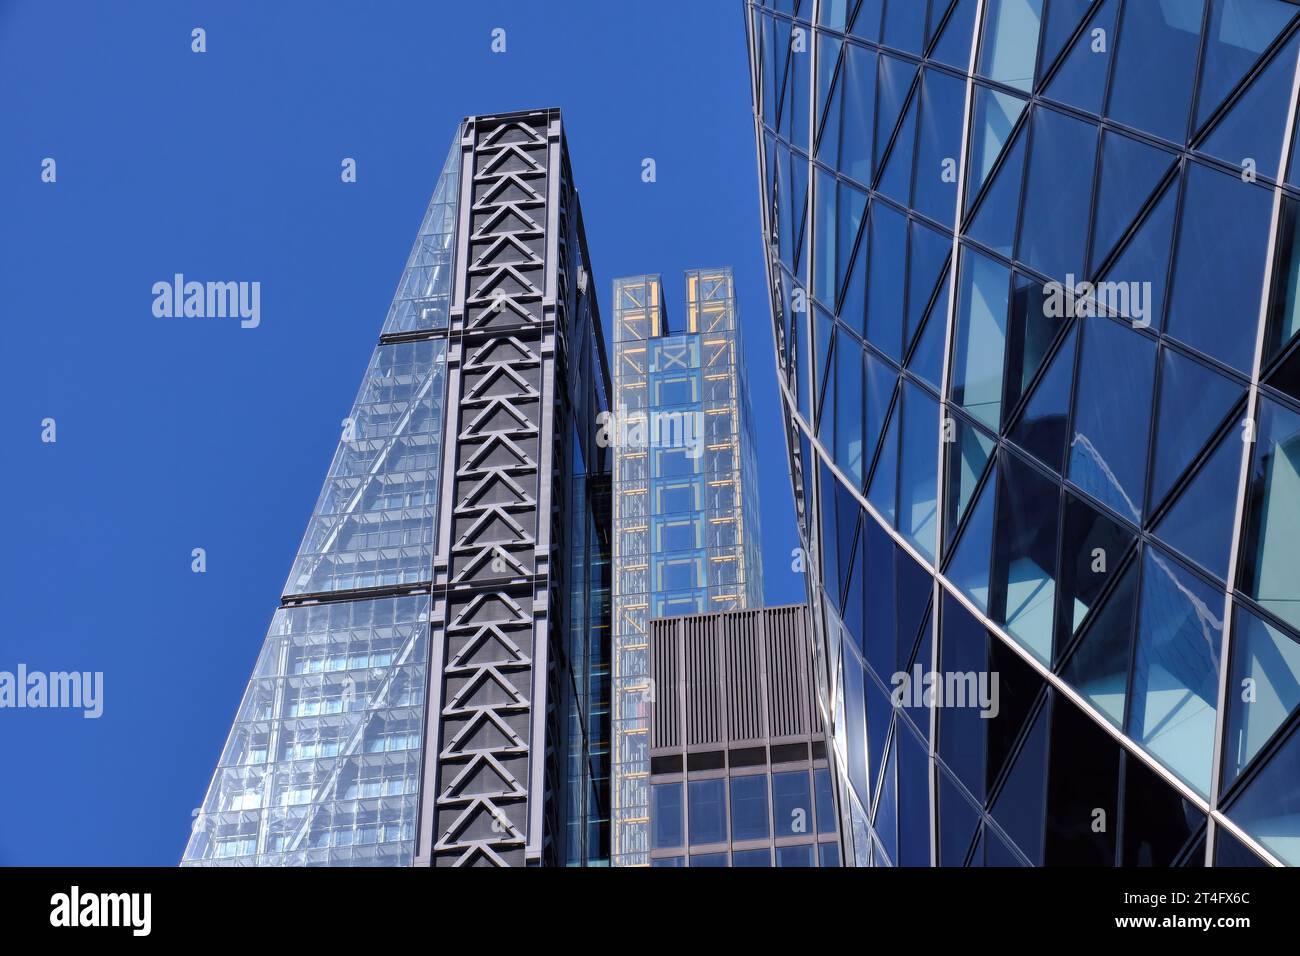 London: Modern Skyscrapers - Leadenhall Building (122 Leadenhall Street) and the Gherkin (20 St Mary Axe) in the City of London, England, UK Stock Photo